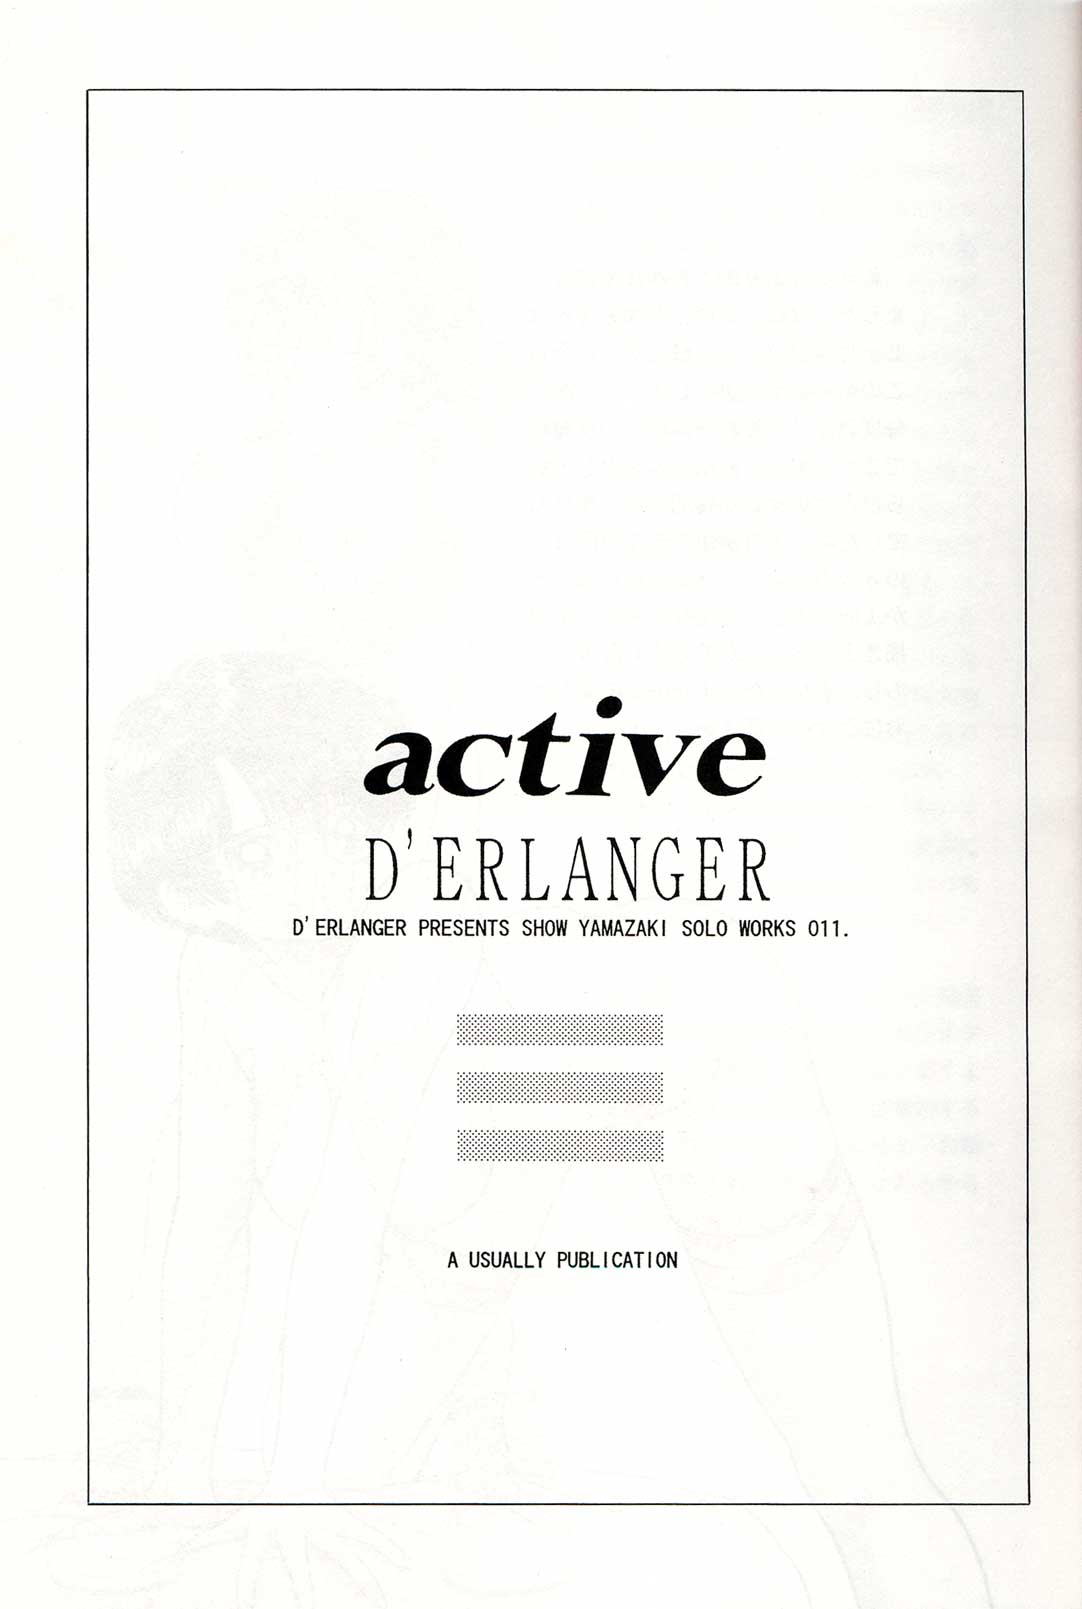 [D'ERLANGER (夜魔咲翔)] Active